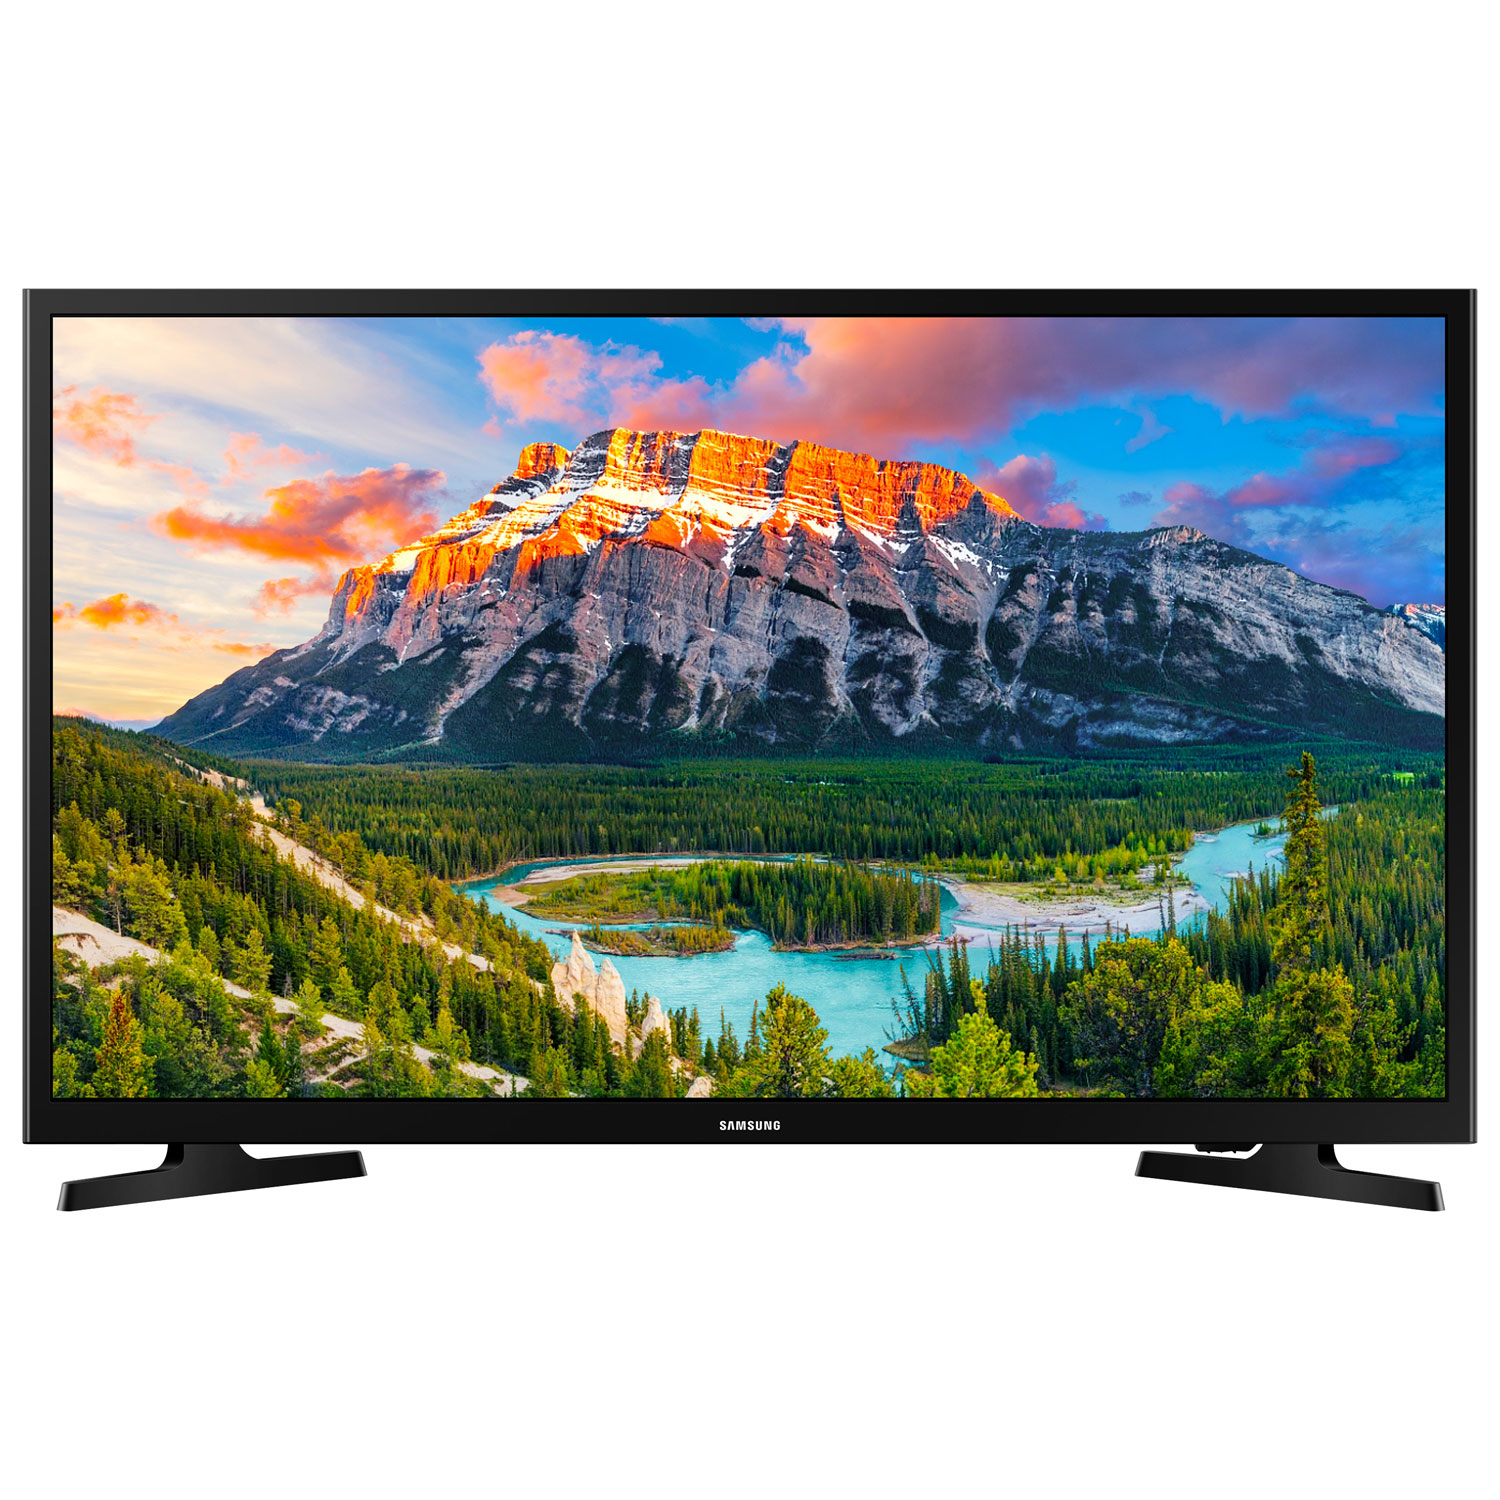 Samsung 43" 1080p HD LED Tizen Smart TV (UN43N5300AFXZC) - Glossy Black